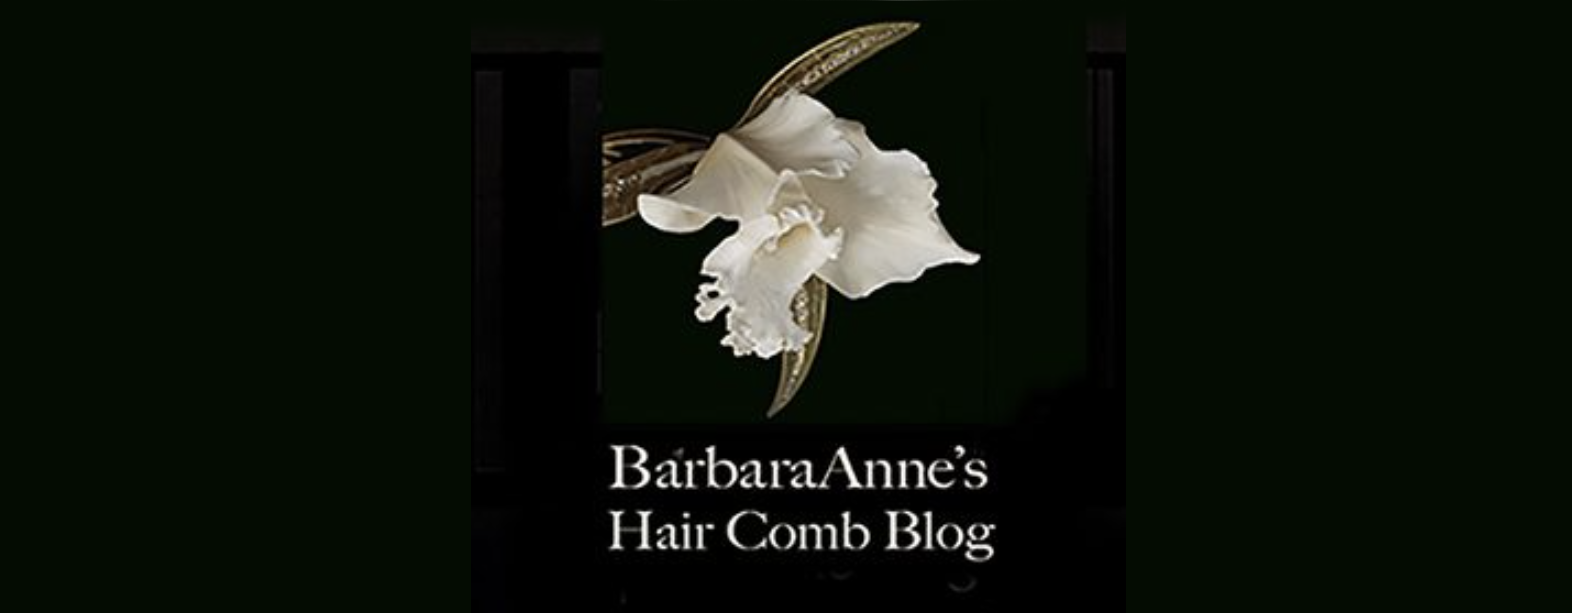 Barbaraanne's Hair Comb Blog